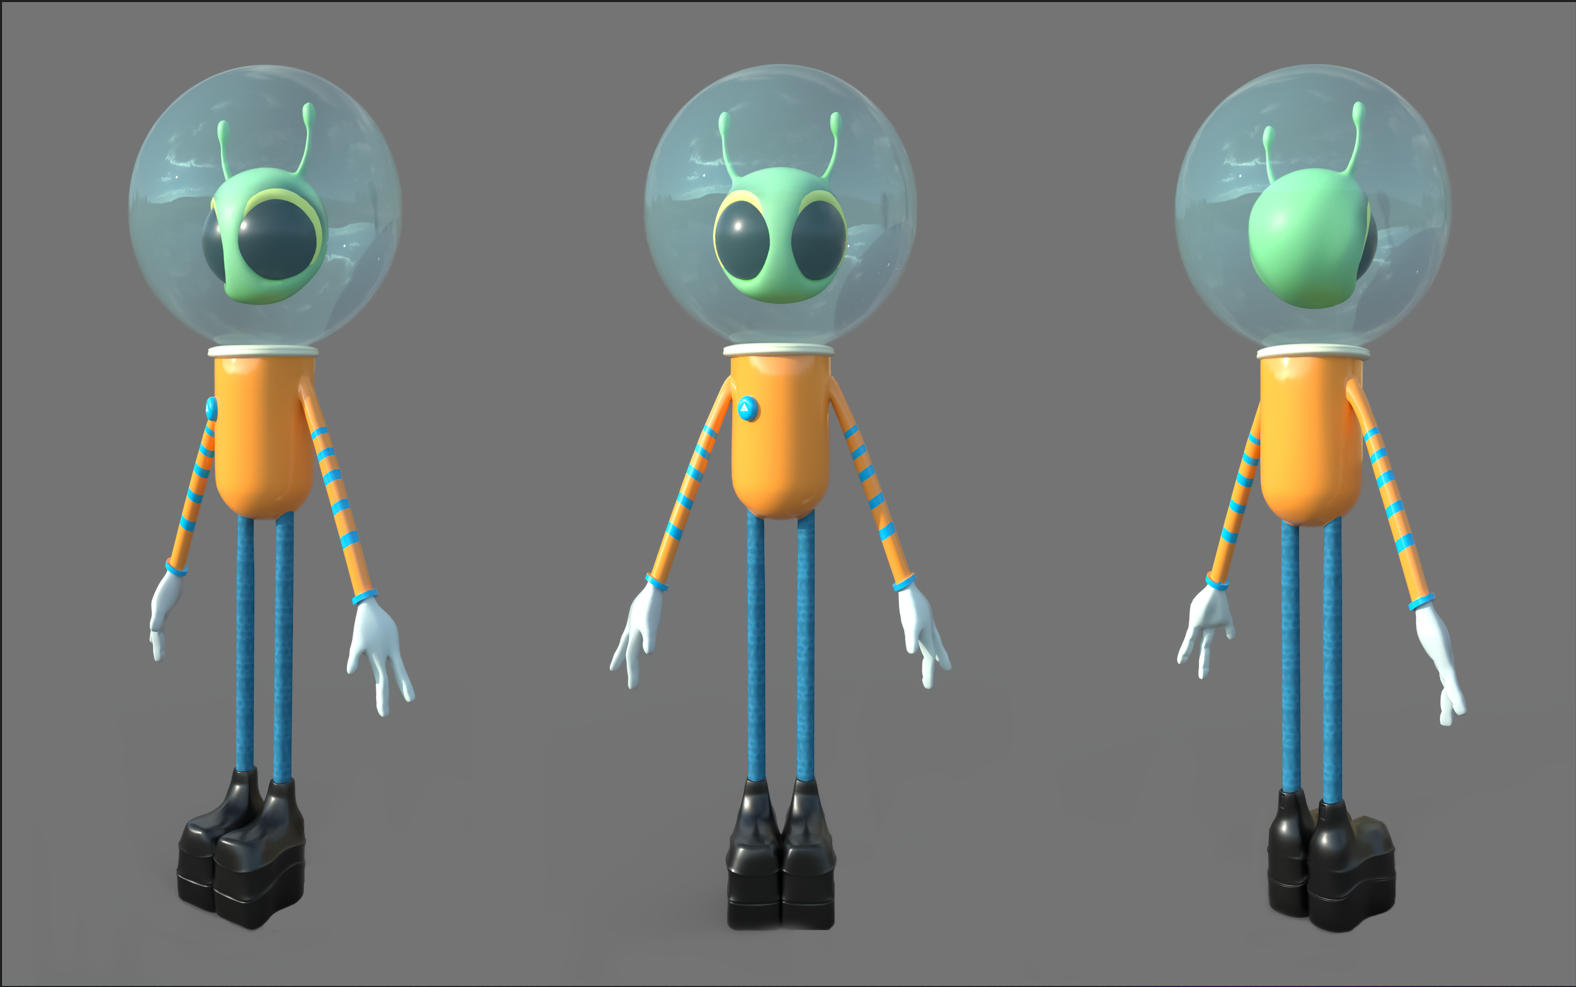  / Alien Turnaround ,3D model ,created using Photoshop and Maya, 2021.